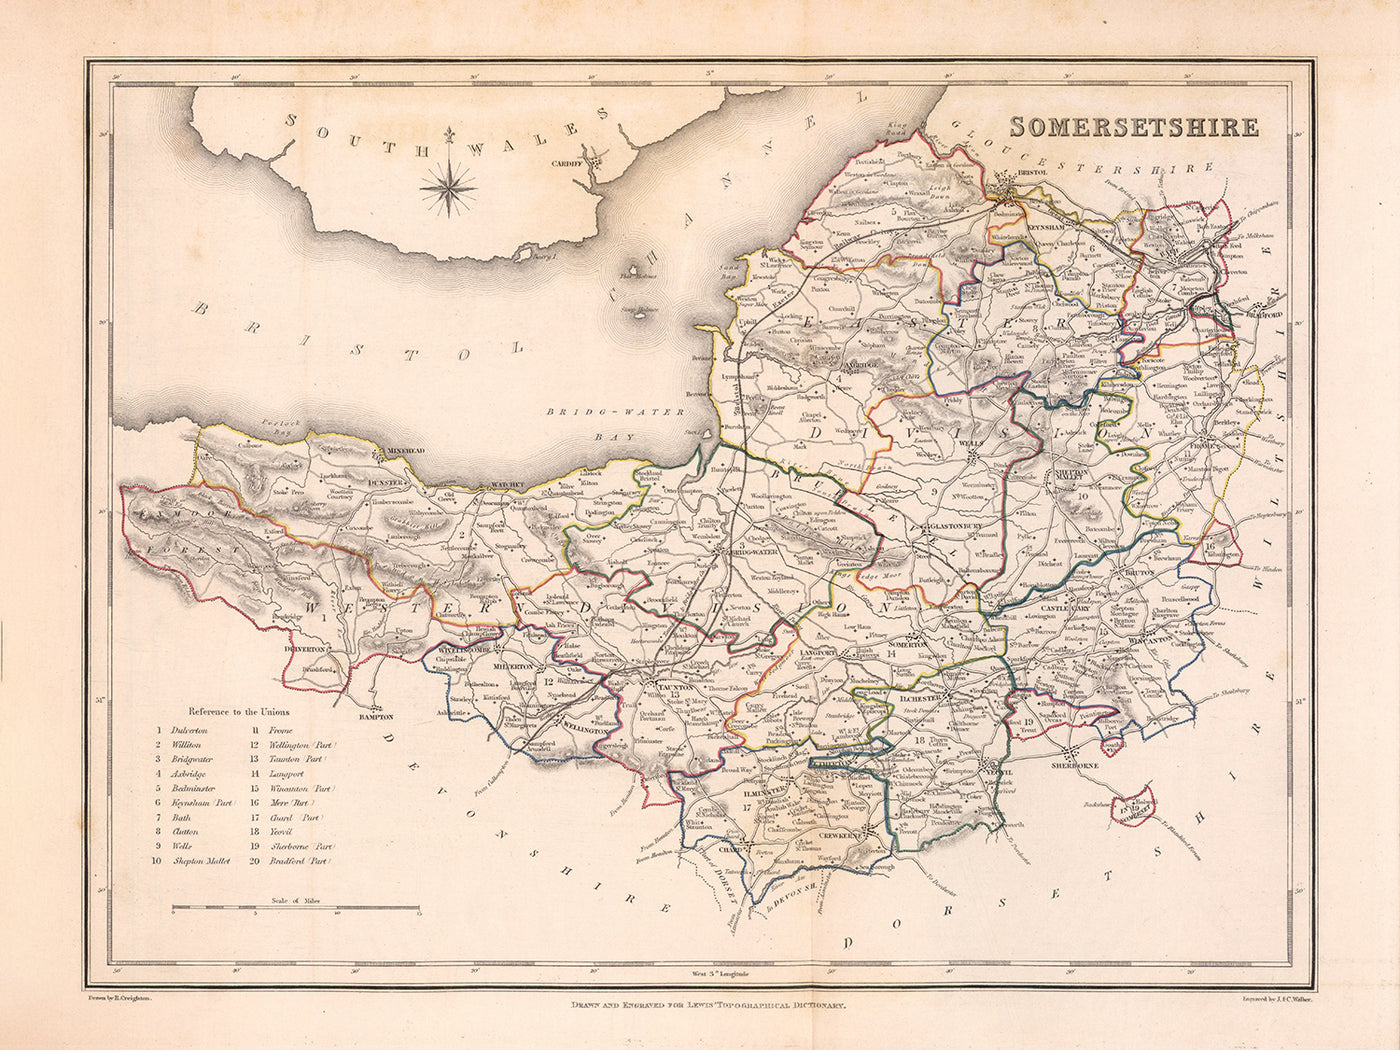 Old Map of Somerset, England by Samuel Lewis, 1844: Bristol, Bath, Weston-super-Mare, Taunton, and Yeovil